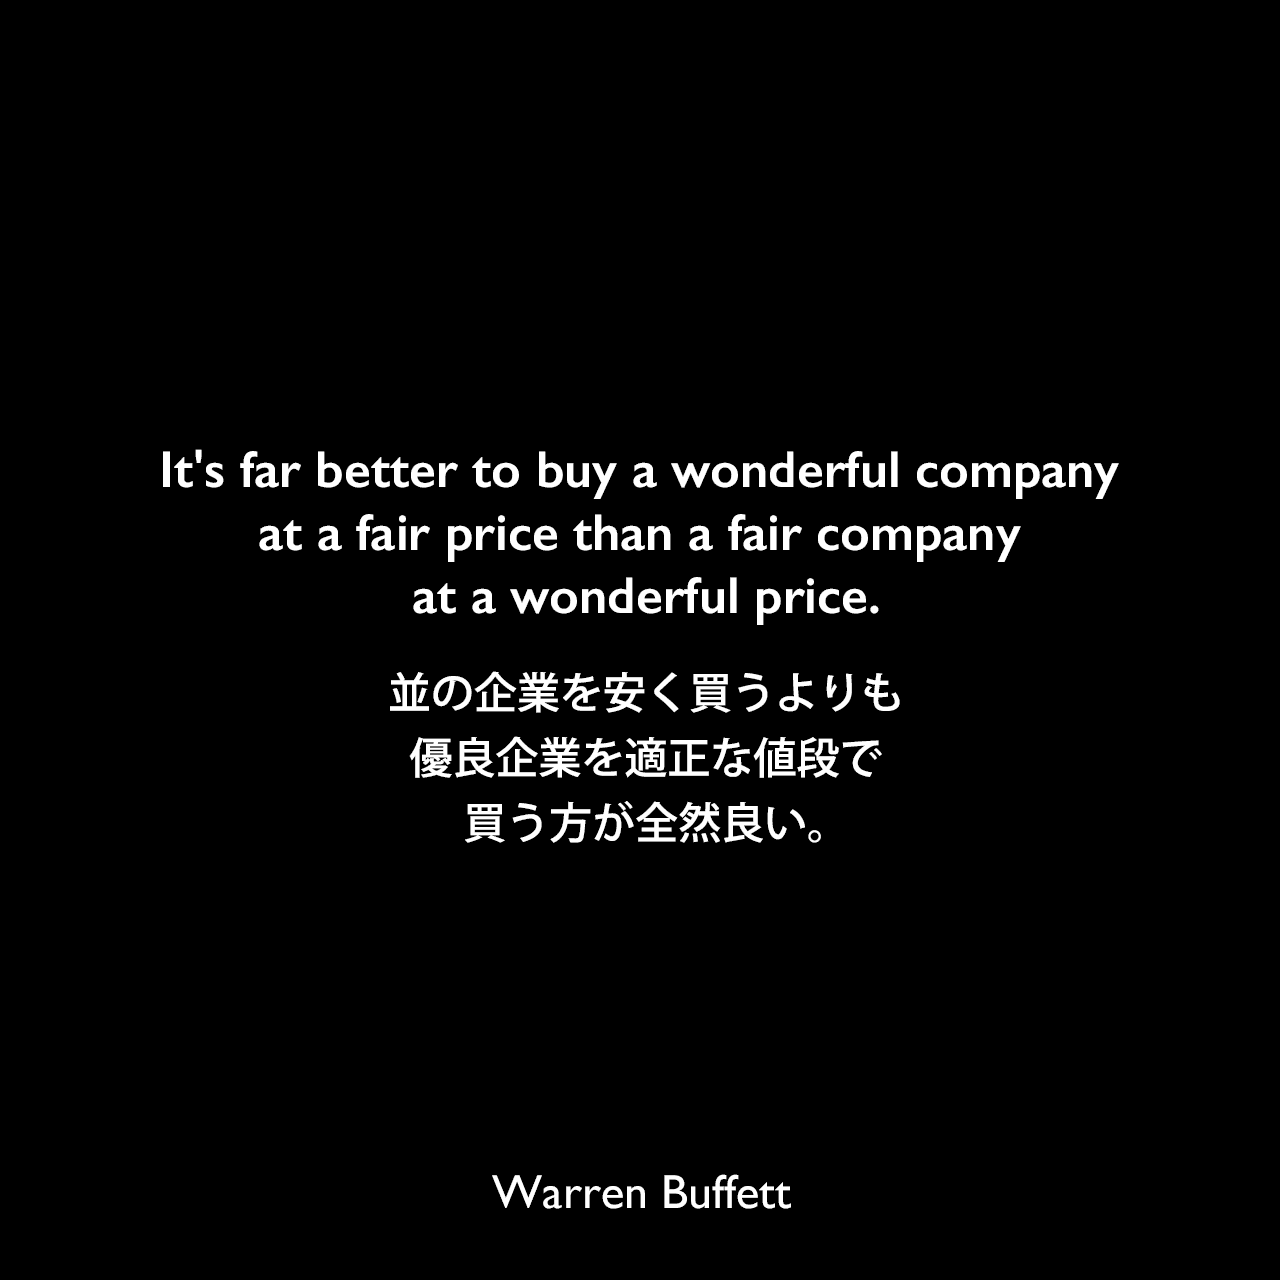 It's far better to buy a wonderful company at a fair price than a fair company at a wonderful price.並の企業を安く買うよりも、優良企業を適正な値段で買う方が全然良い。Warren Buffett